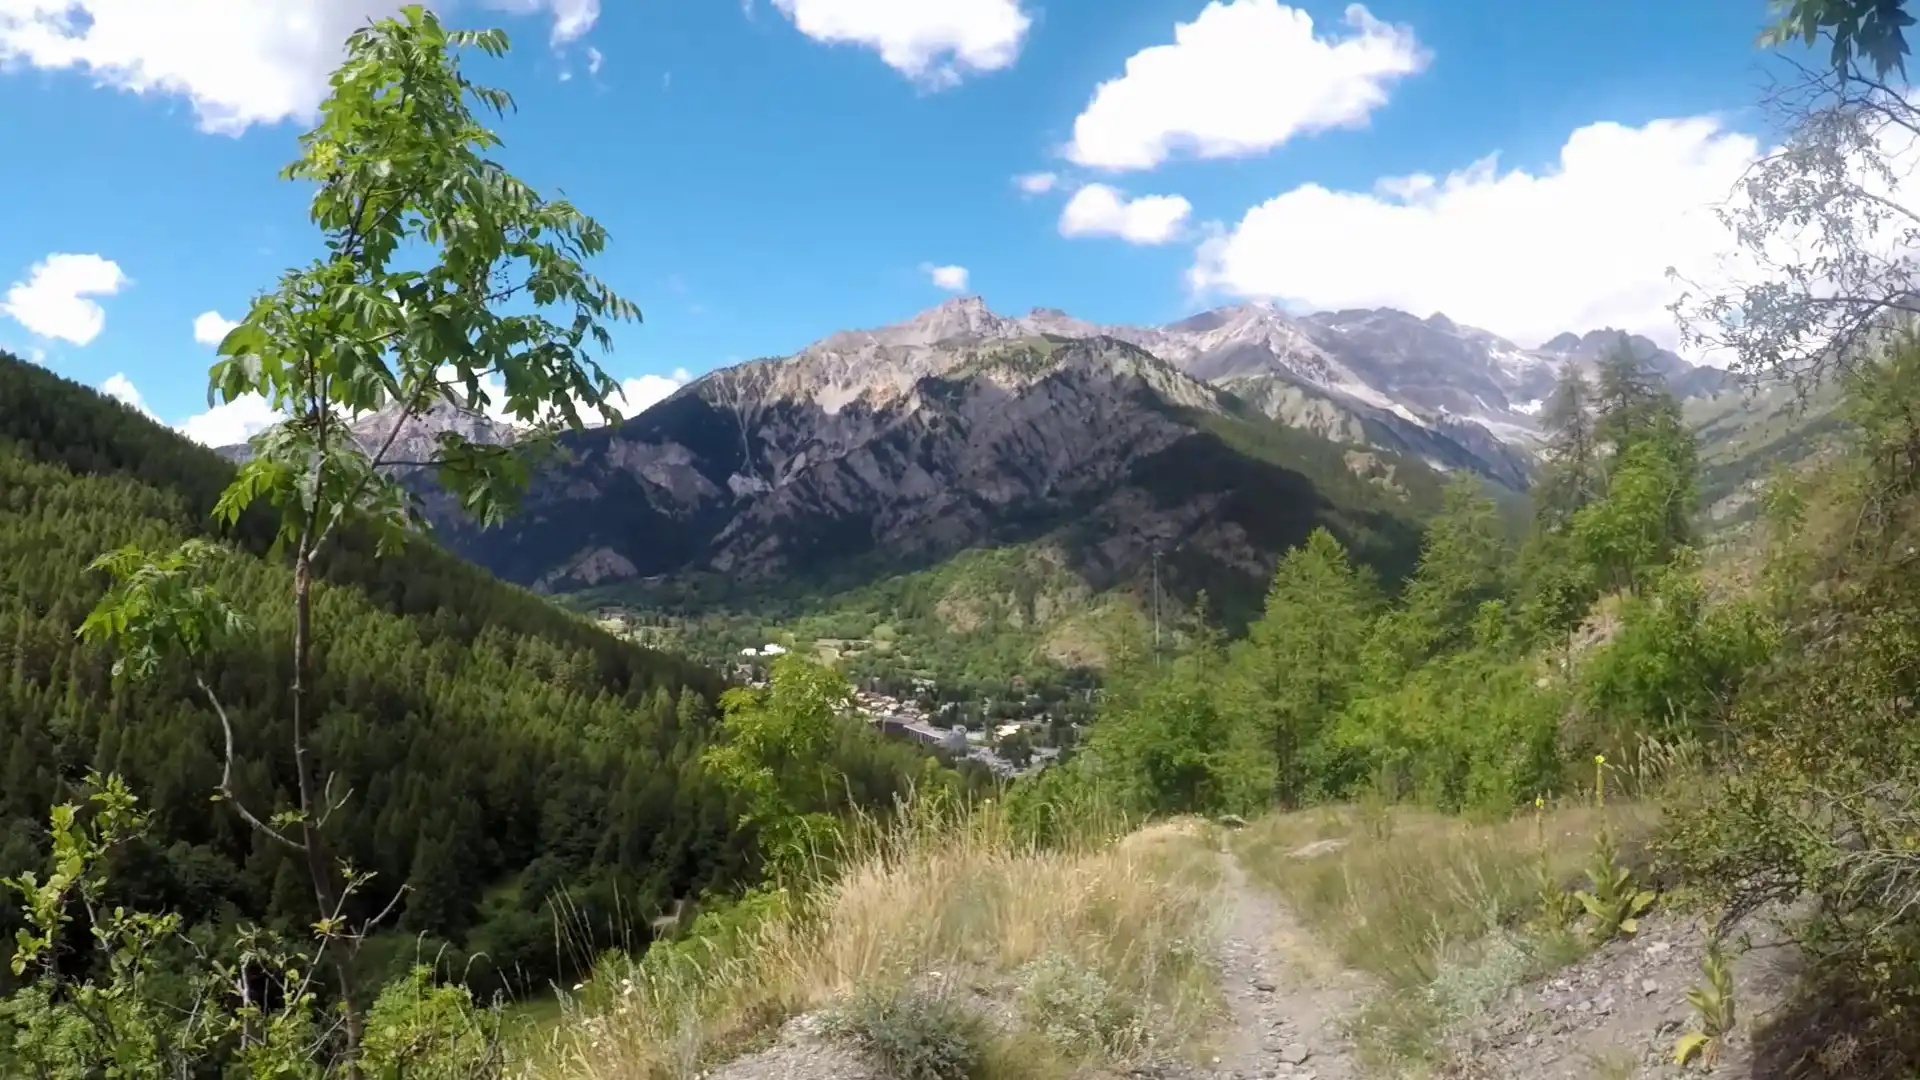 Quattro passi in montagna - La via du viò - Forte Bramafam - Bardonecchia (TO)